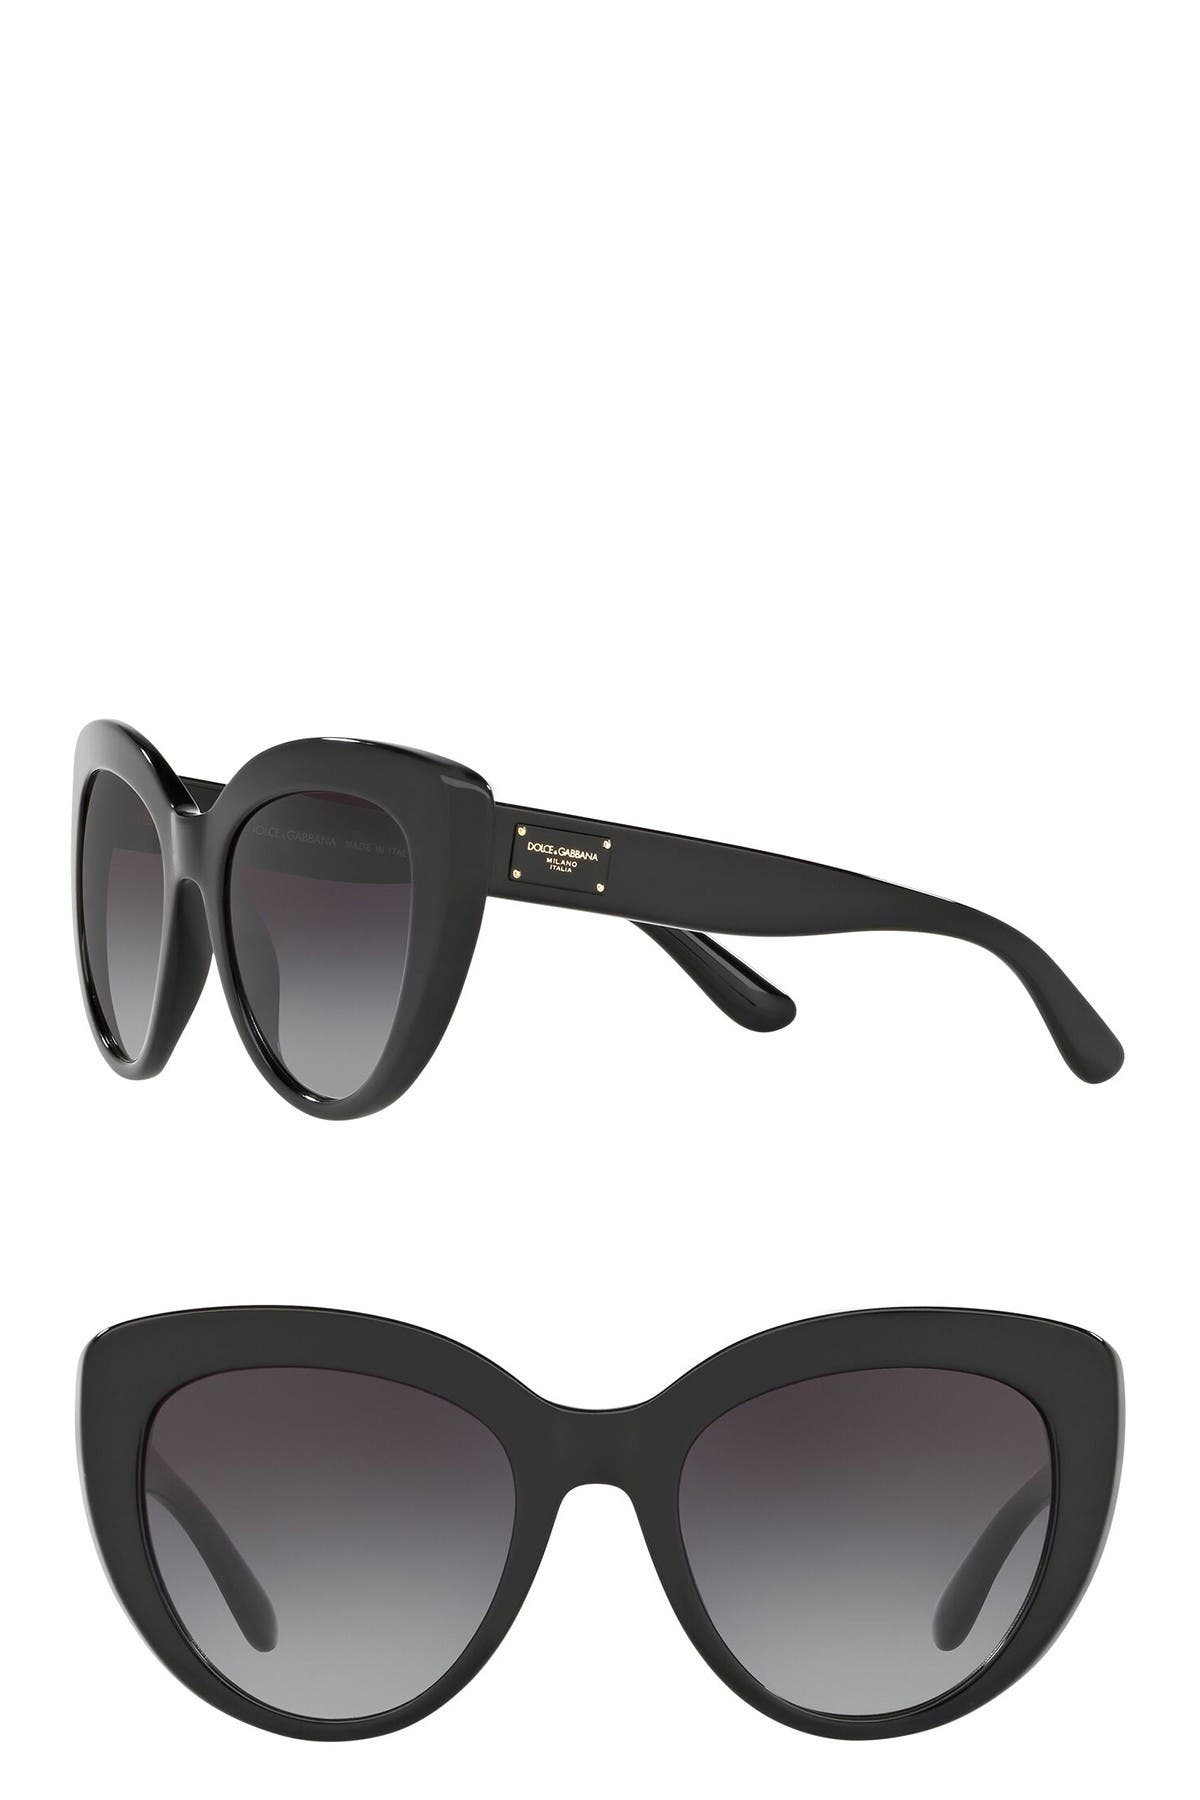 cat eye dolce and gabbana sunglasses